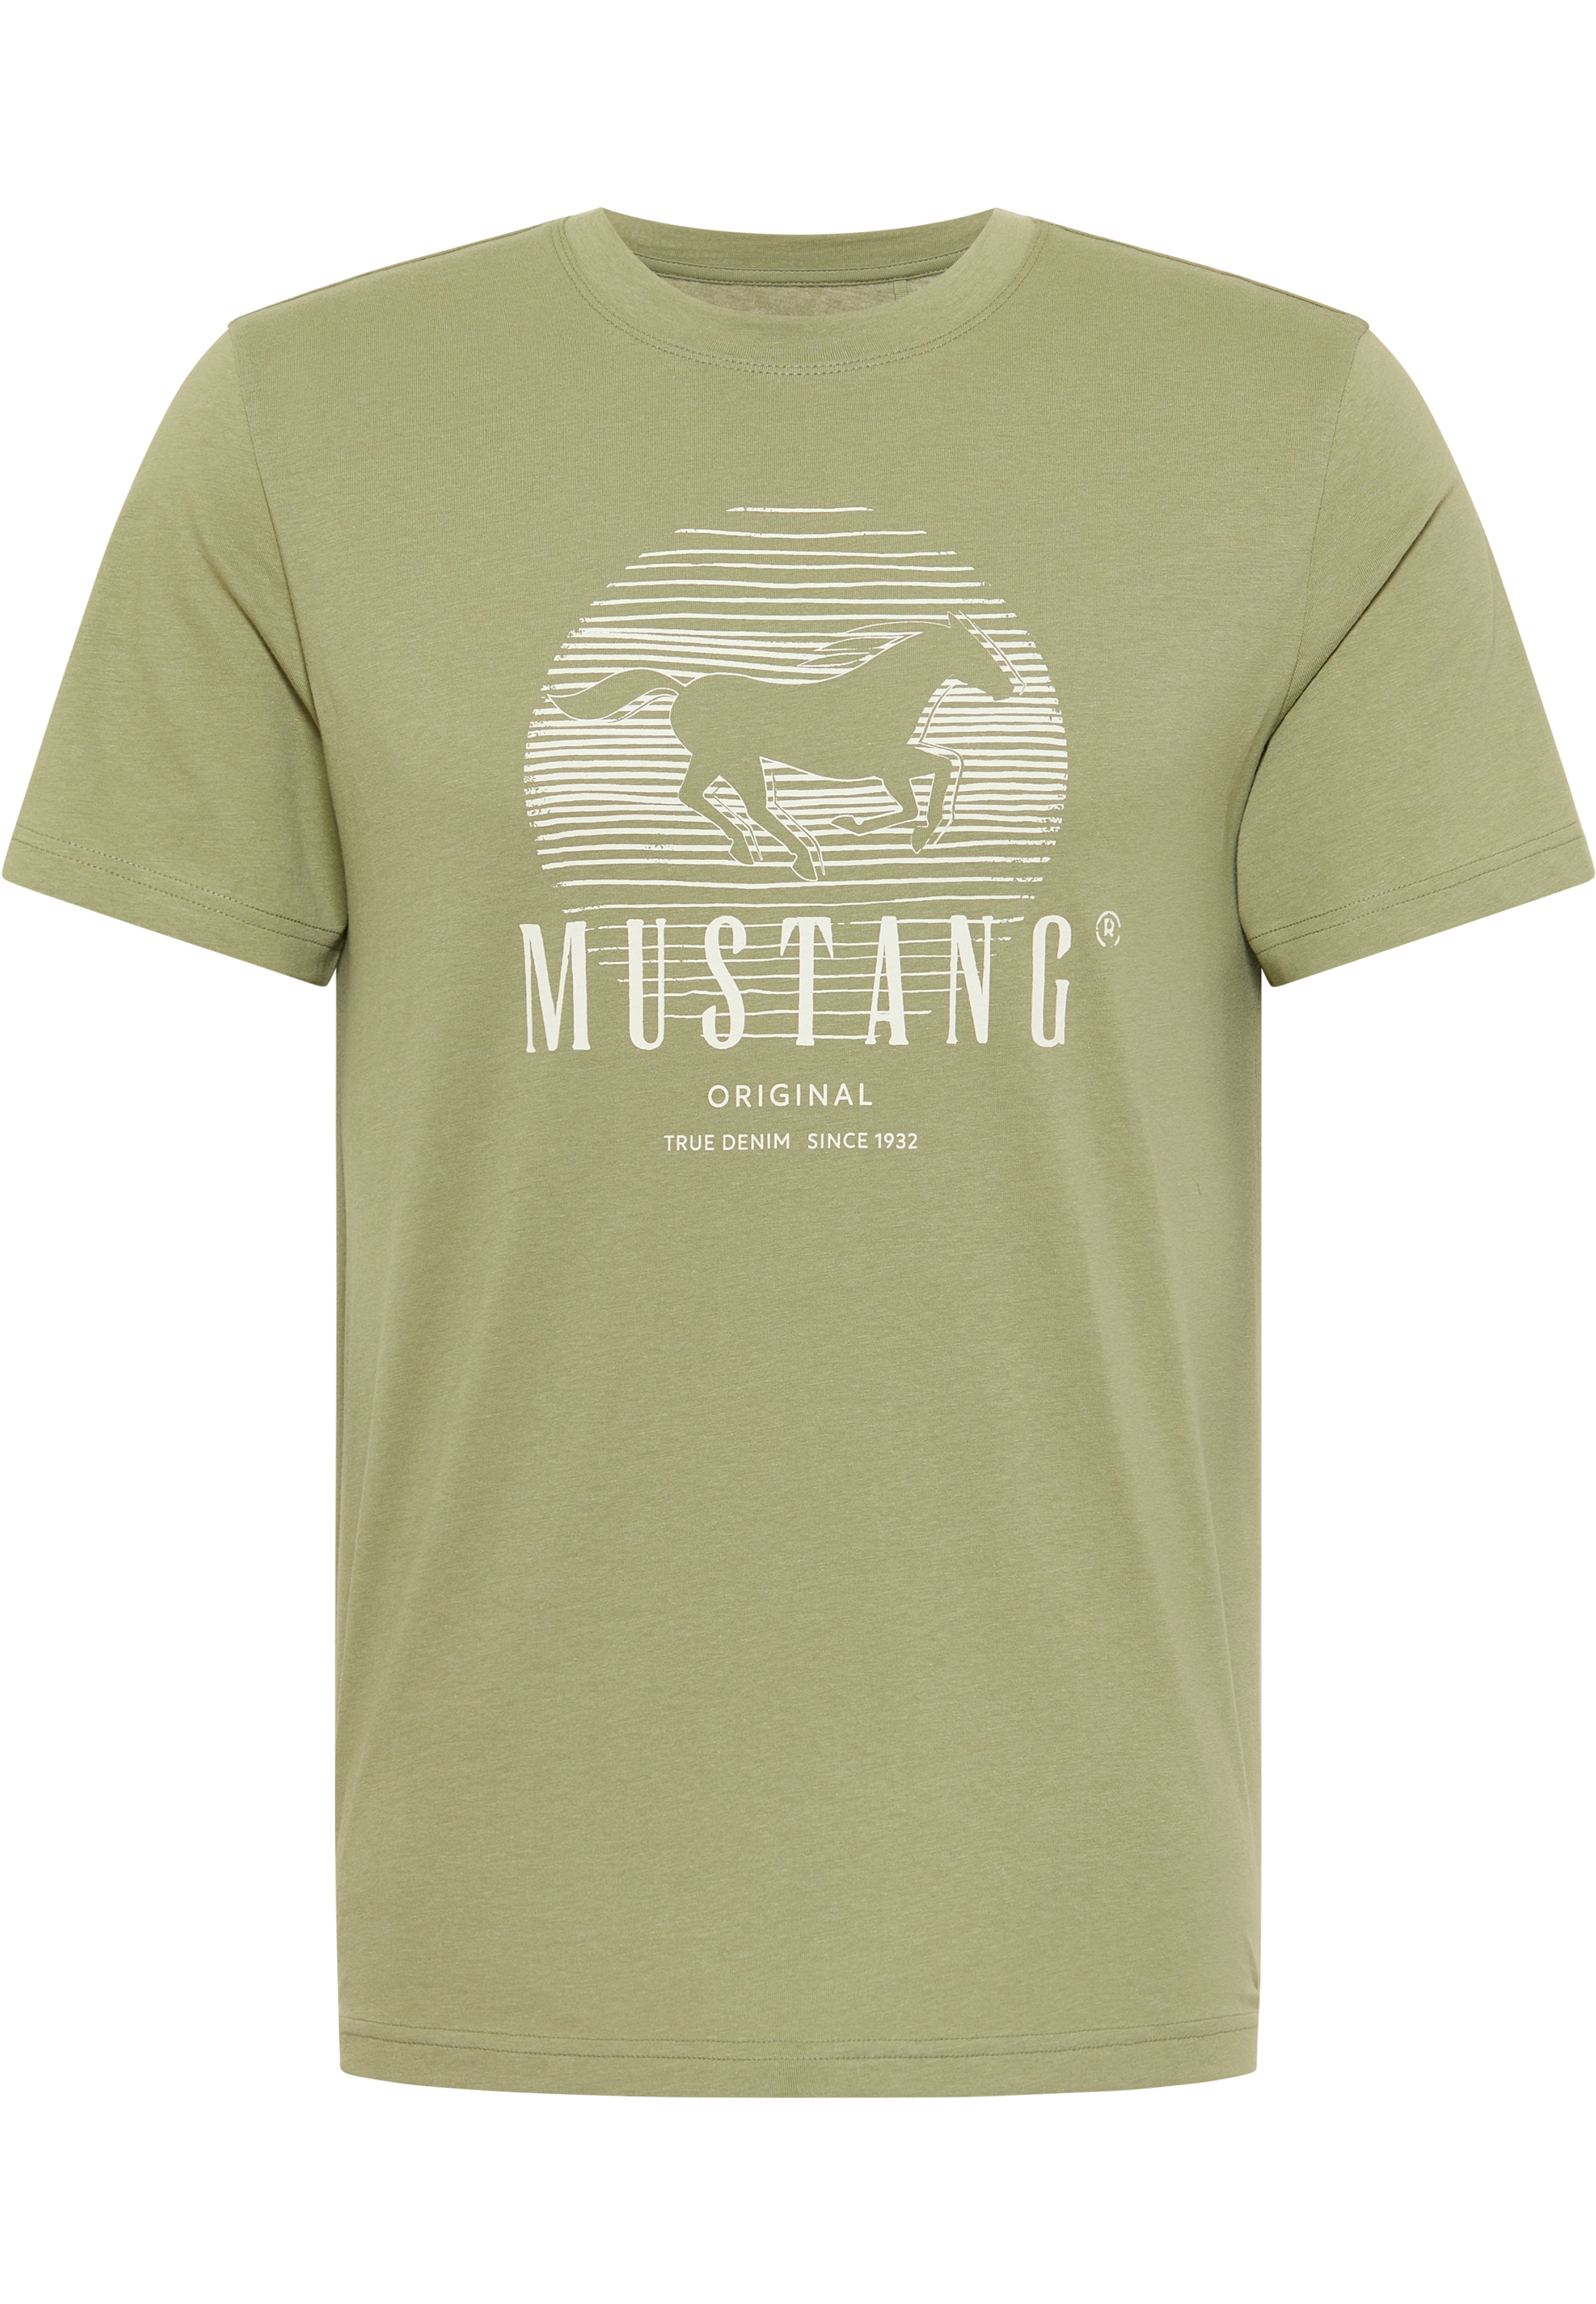 »Mustang bei MUSTANG Print-Shirt« T-Shirt Kurzarmshirt ♕